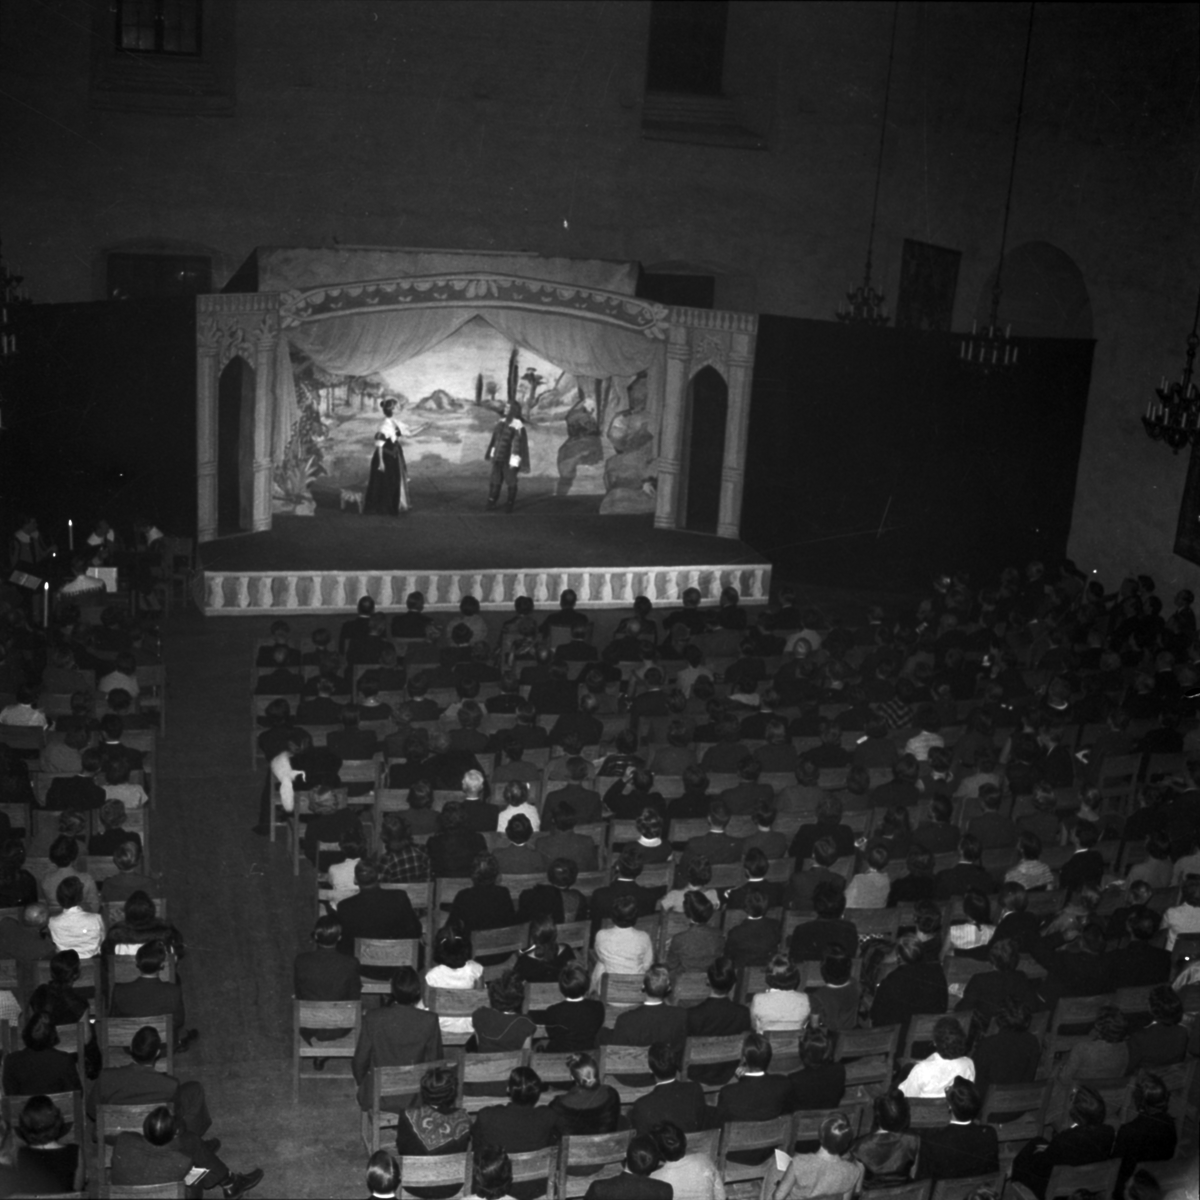 "Studentteatern med kungabesök på rikssalen", Uppsala 1955